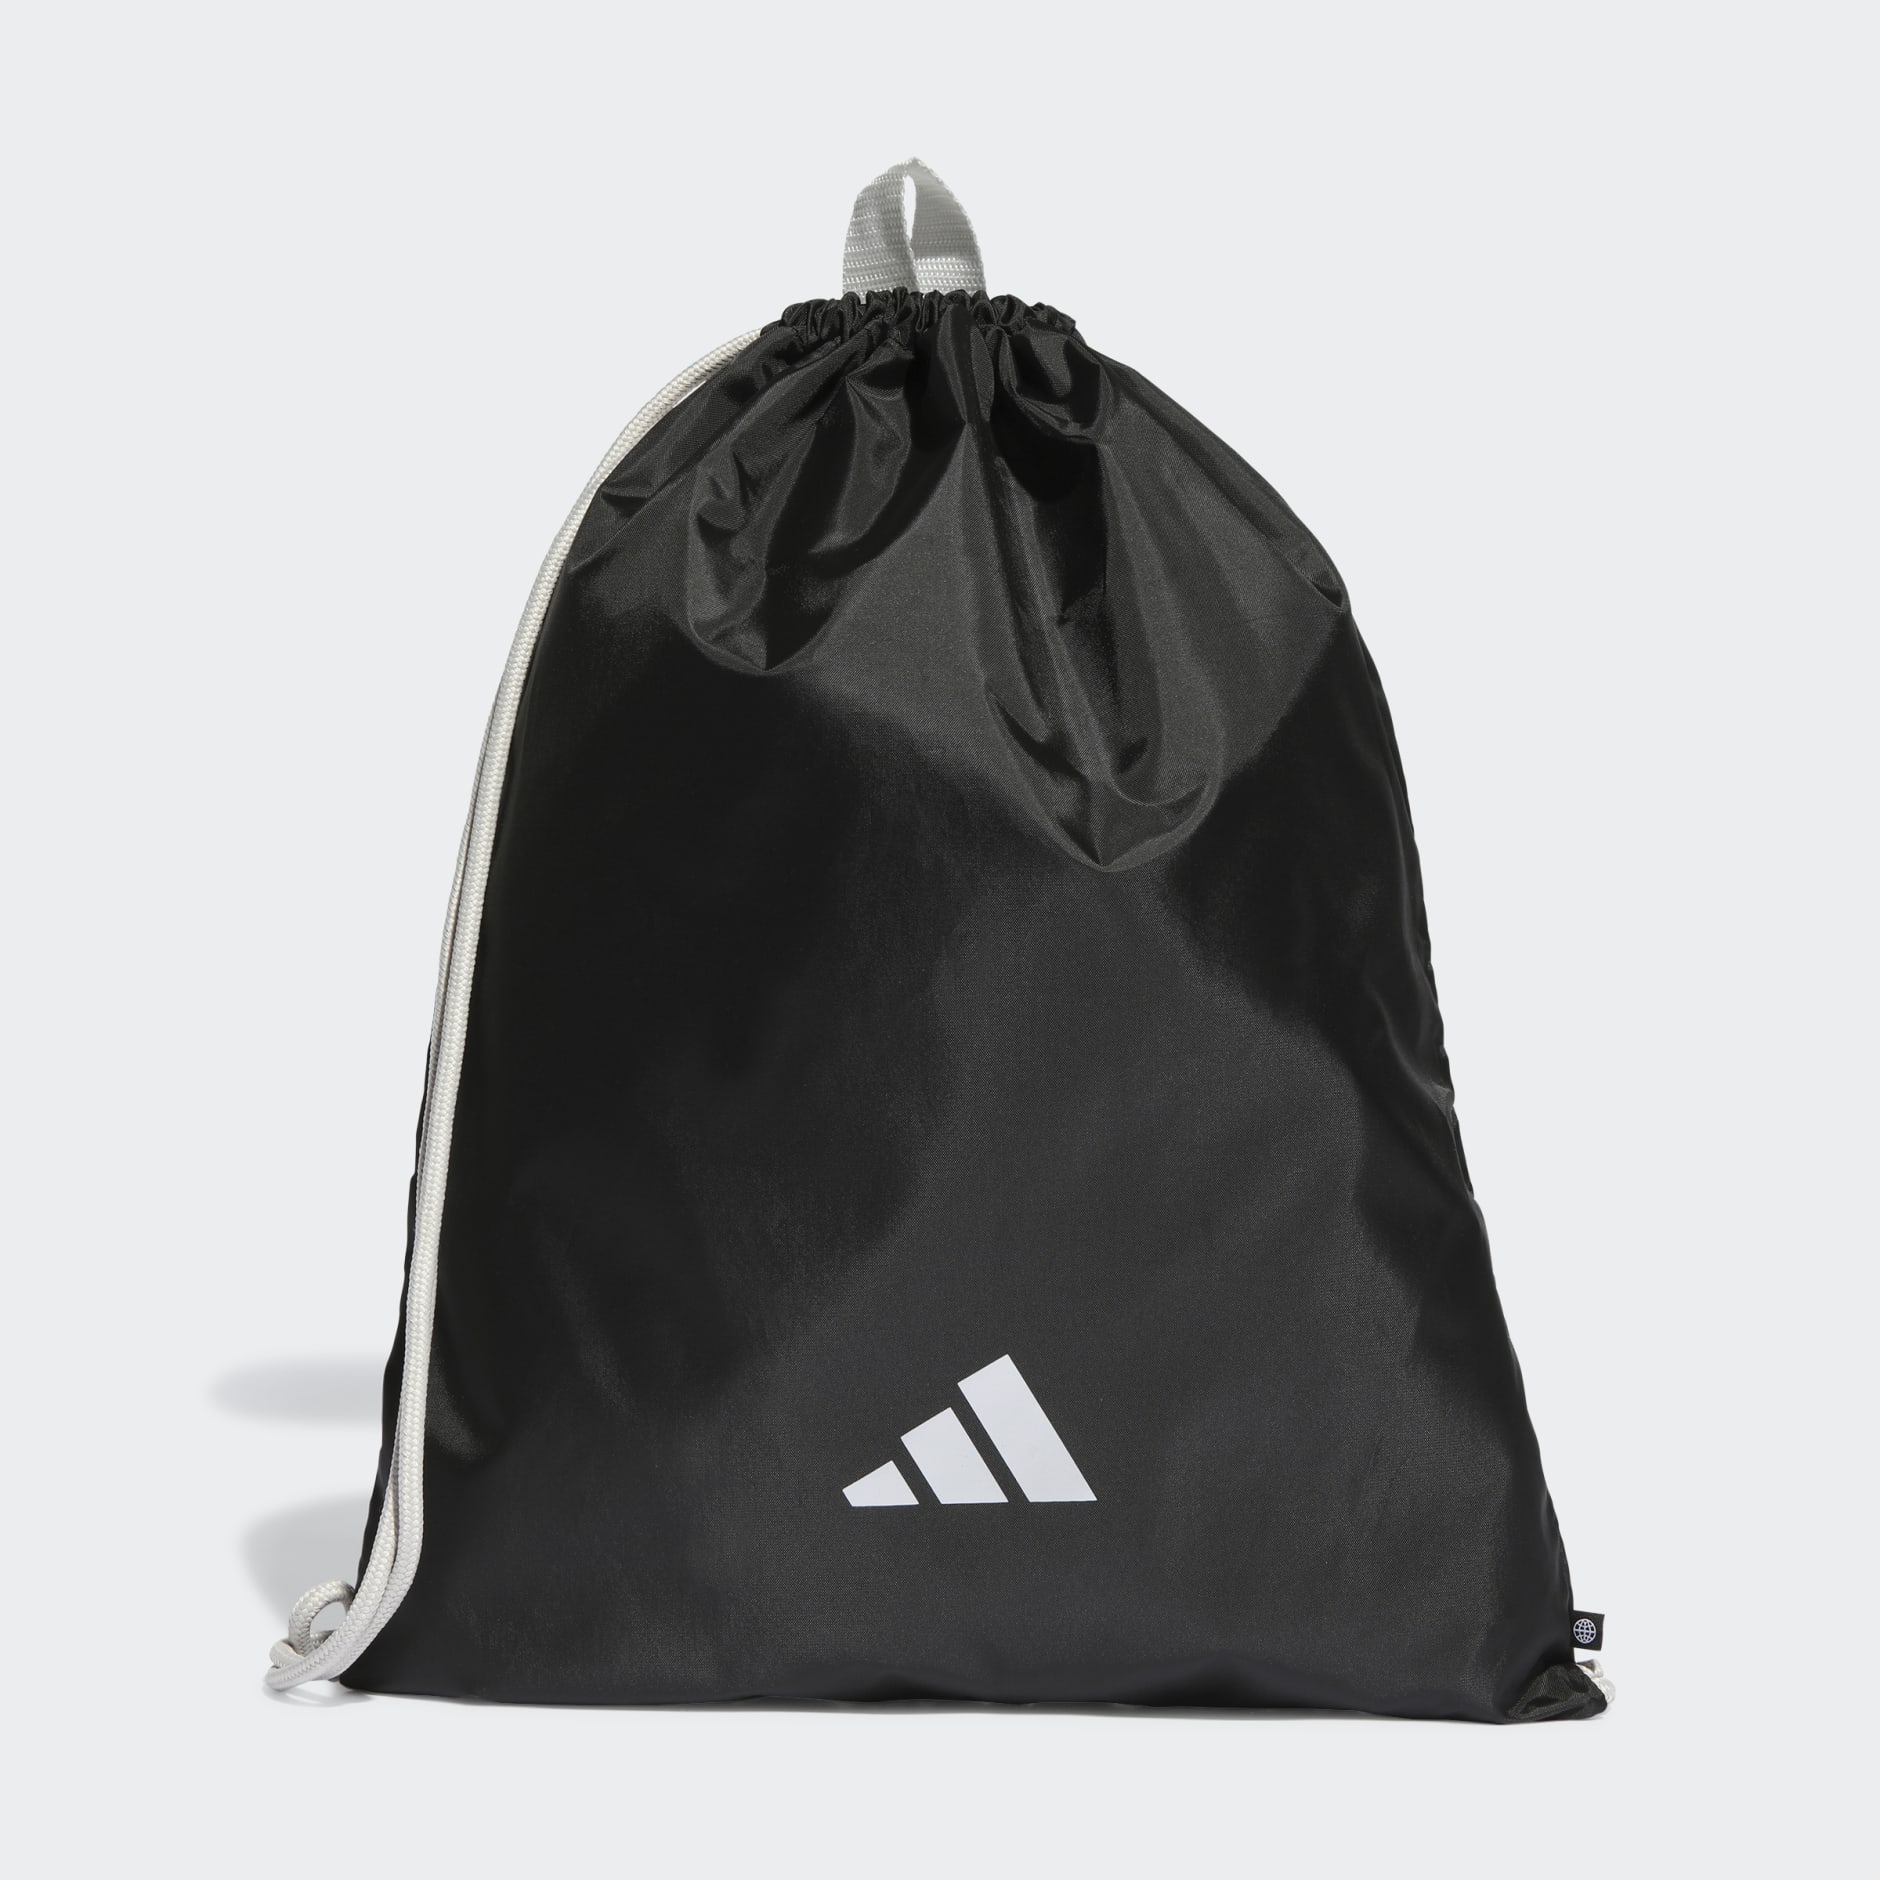 Buy Adidas Scorer Medium Duffle Black Gym Bag at Amazon.in